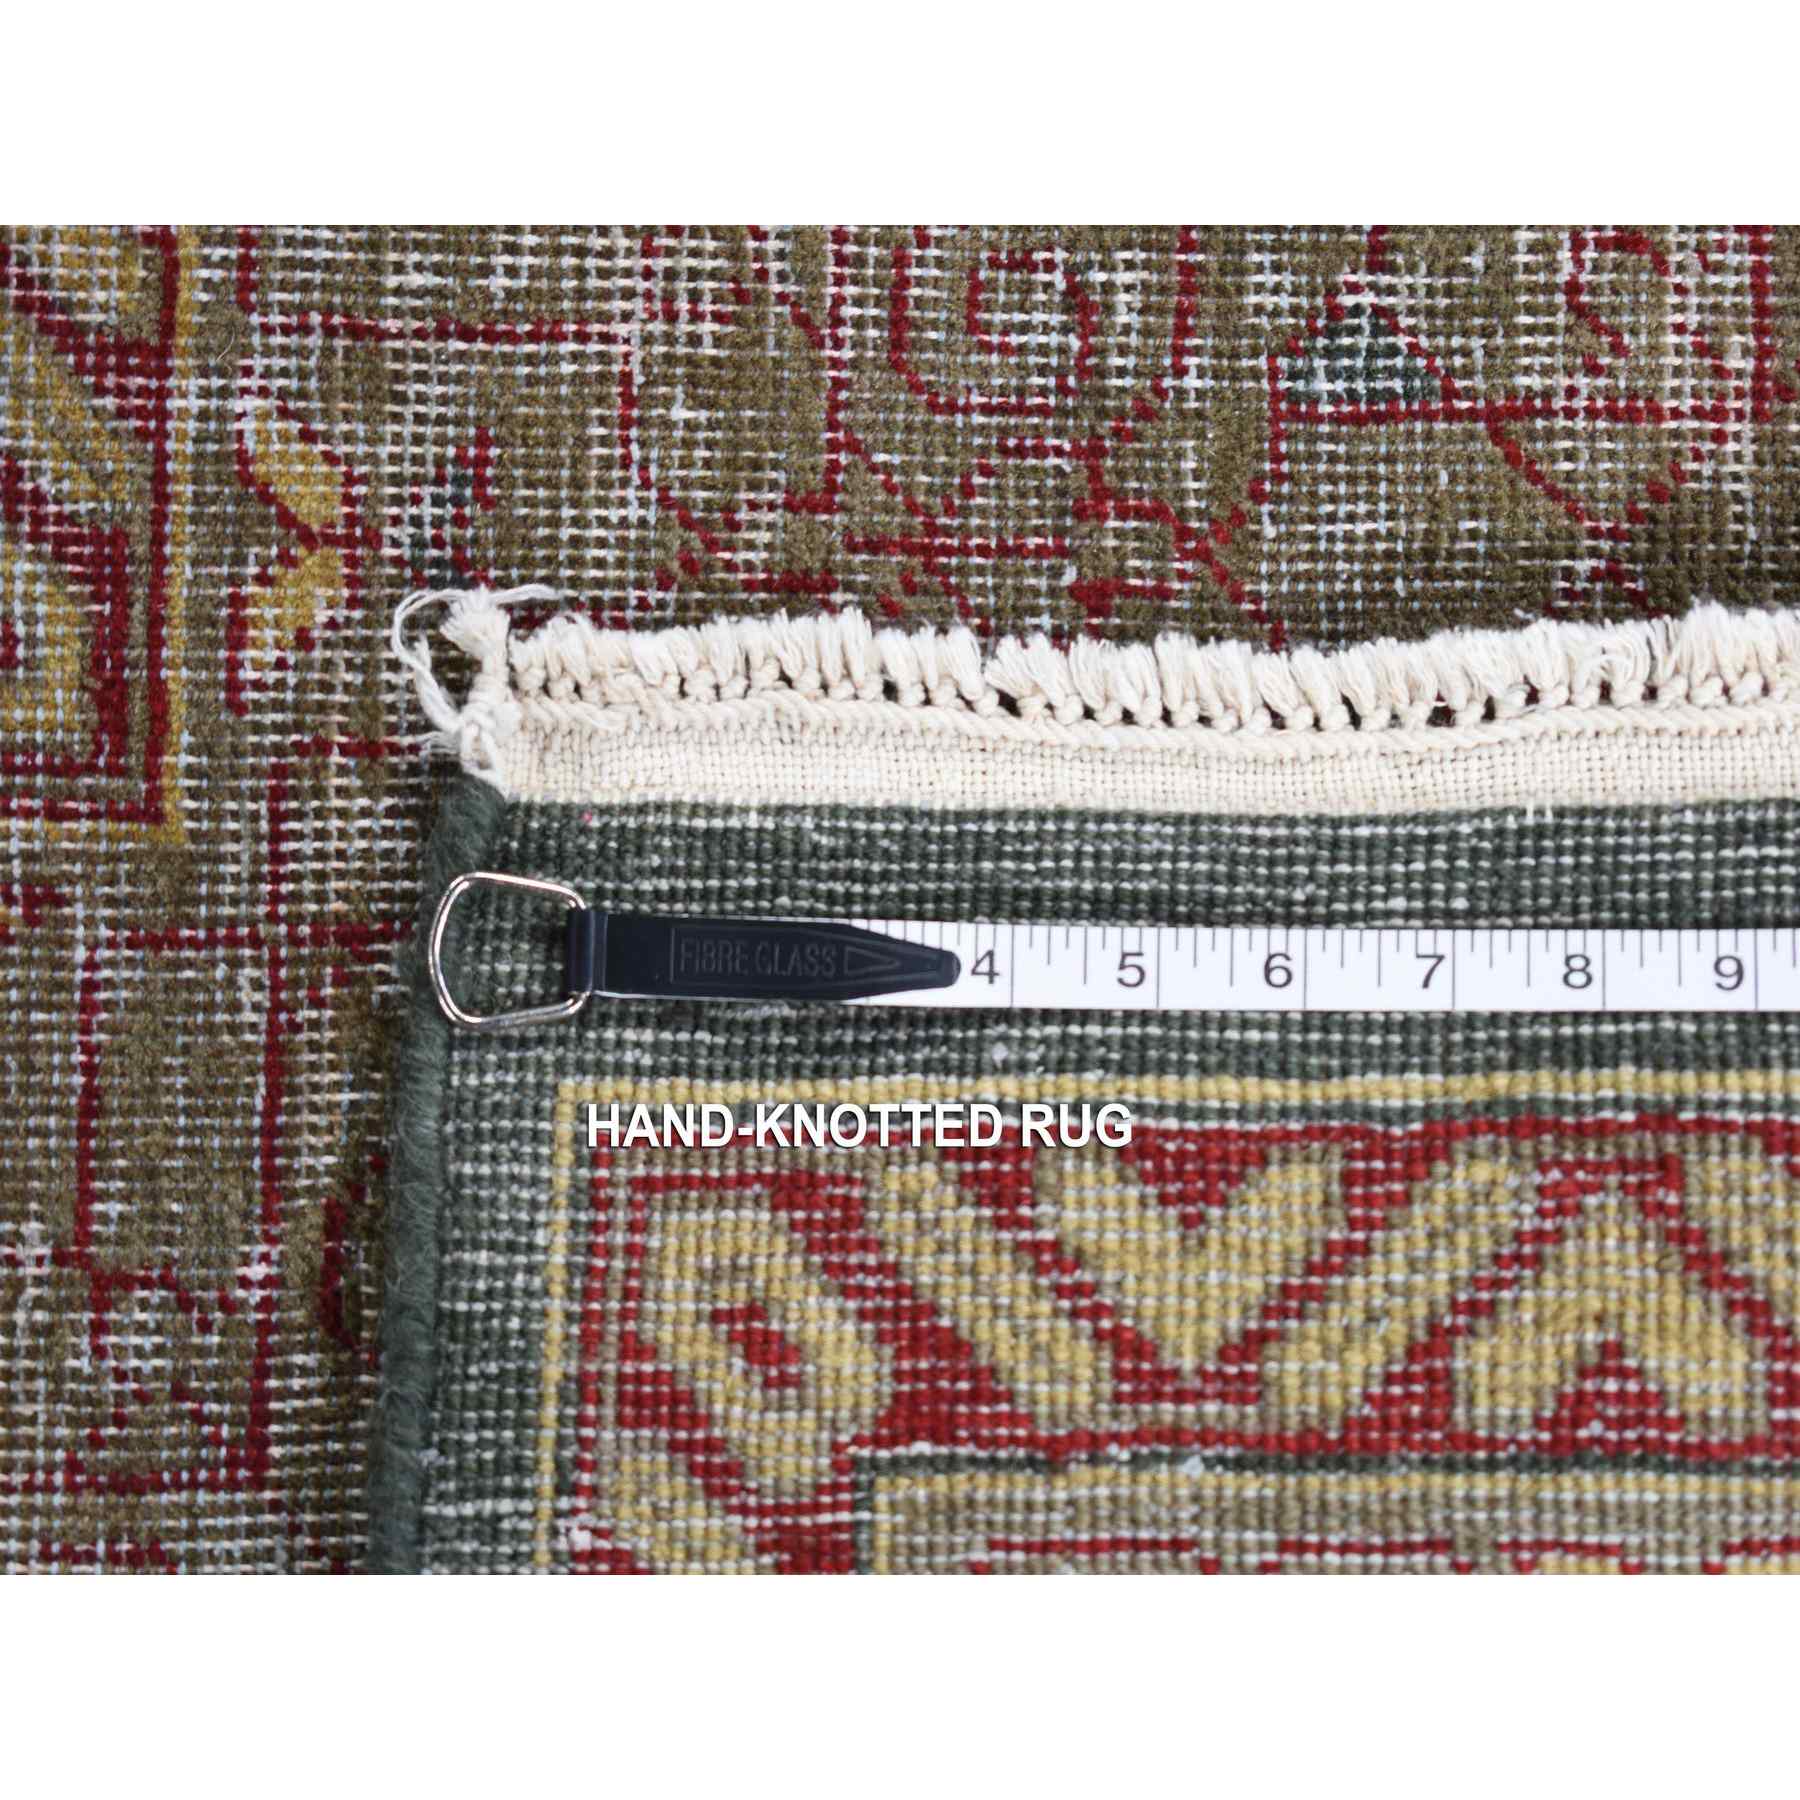 Mamluk-Hand-Knotted-Rug-403250